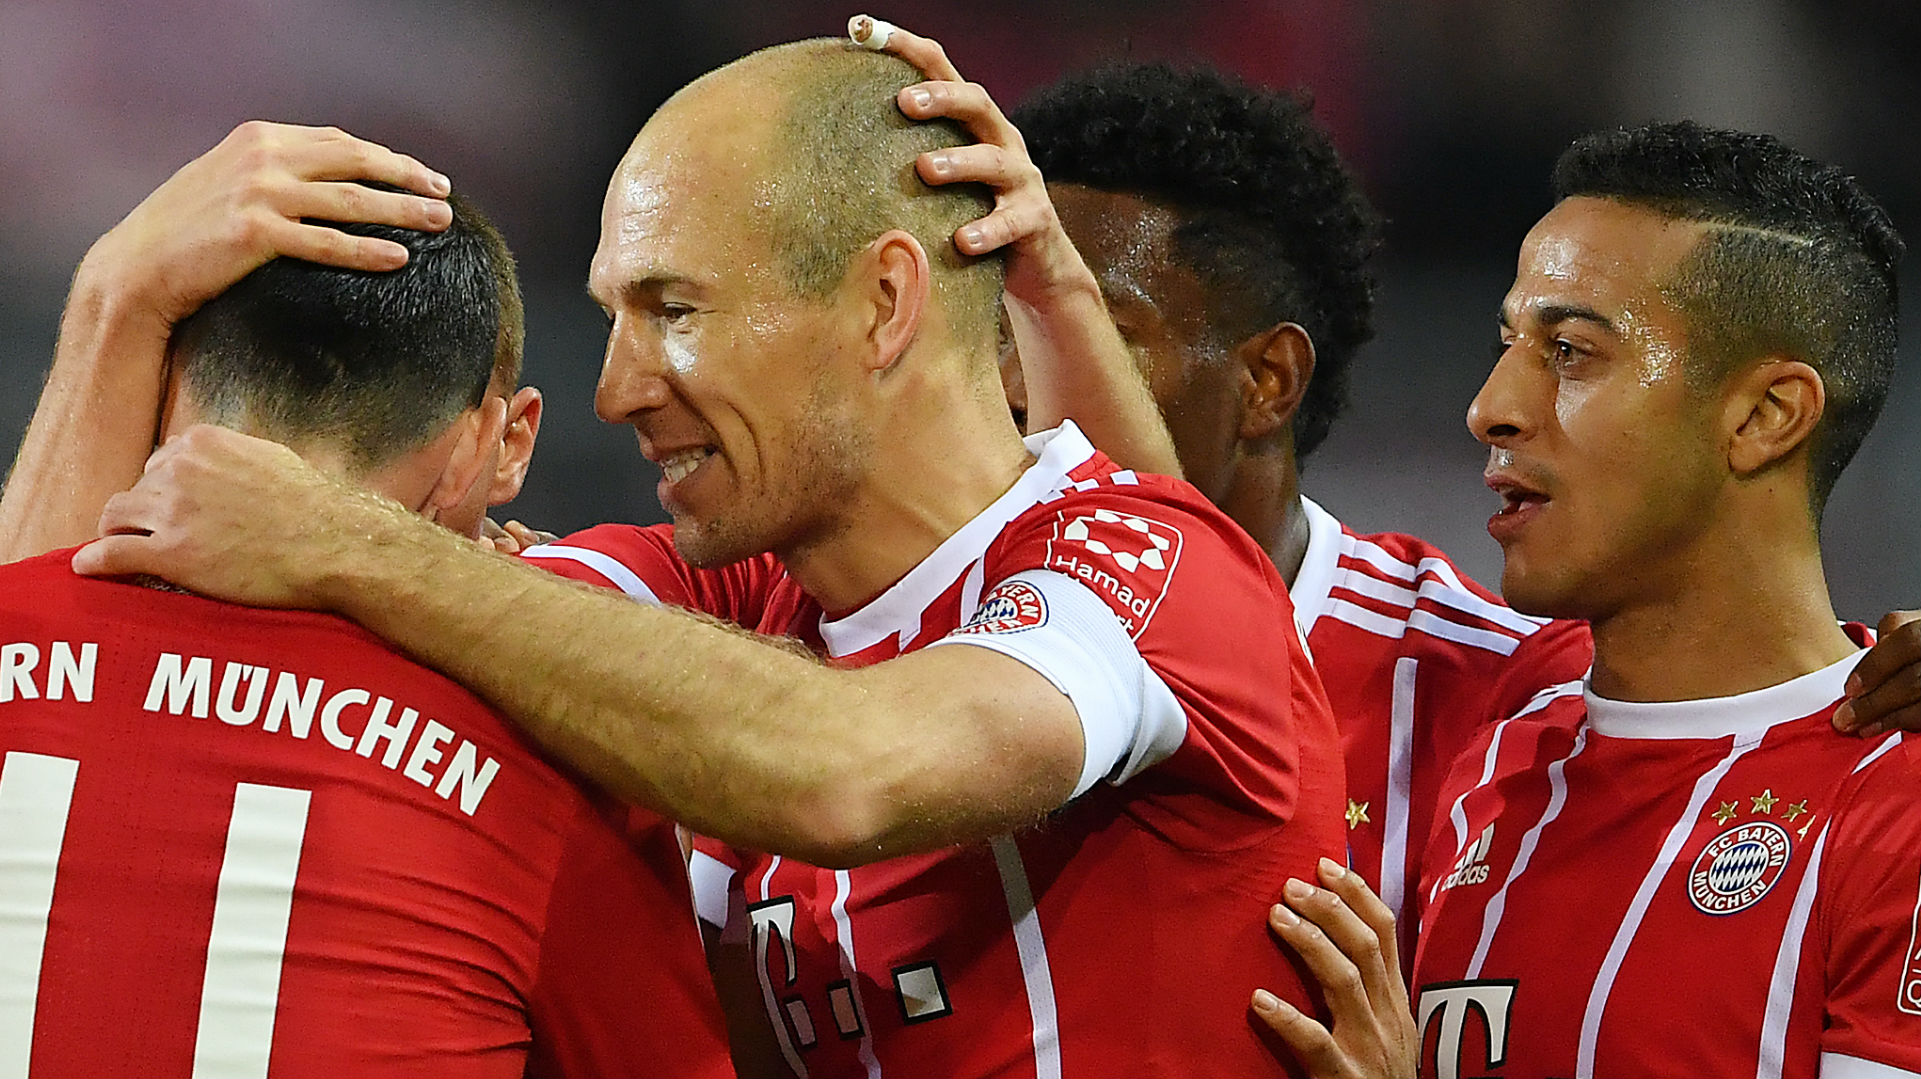 Arjen Robben, Bayern Munich